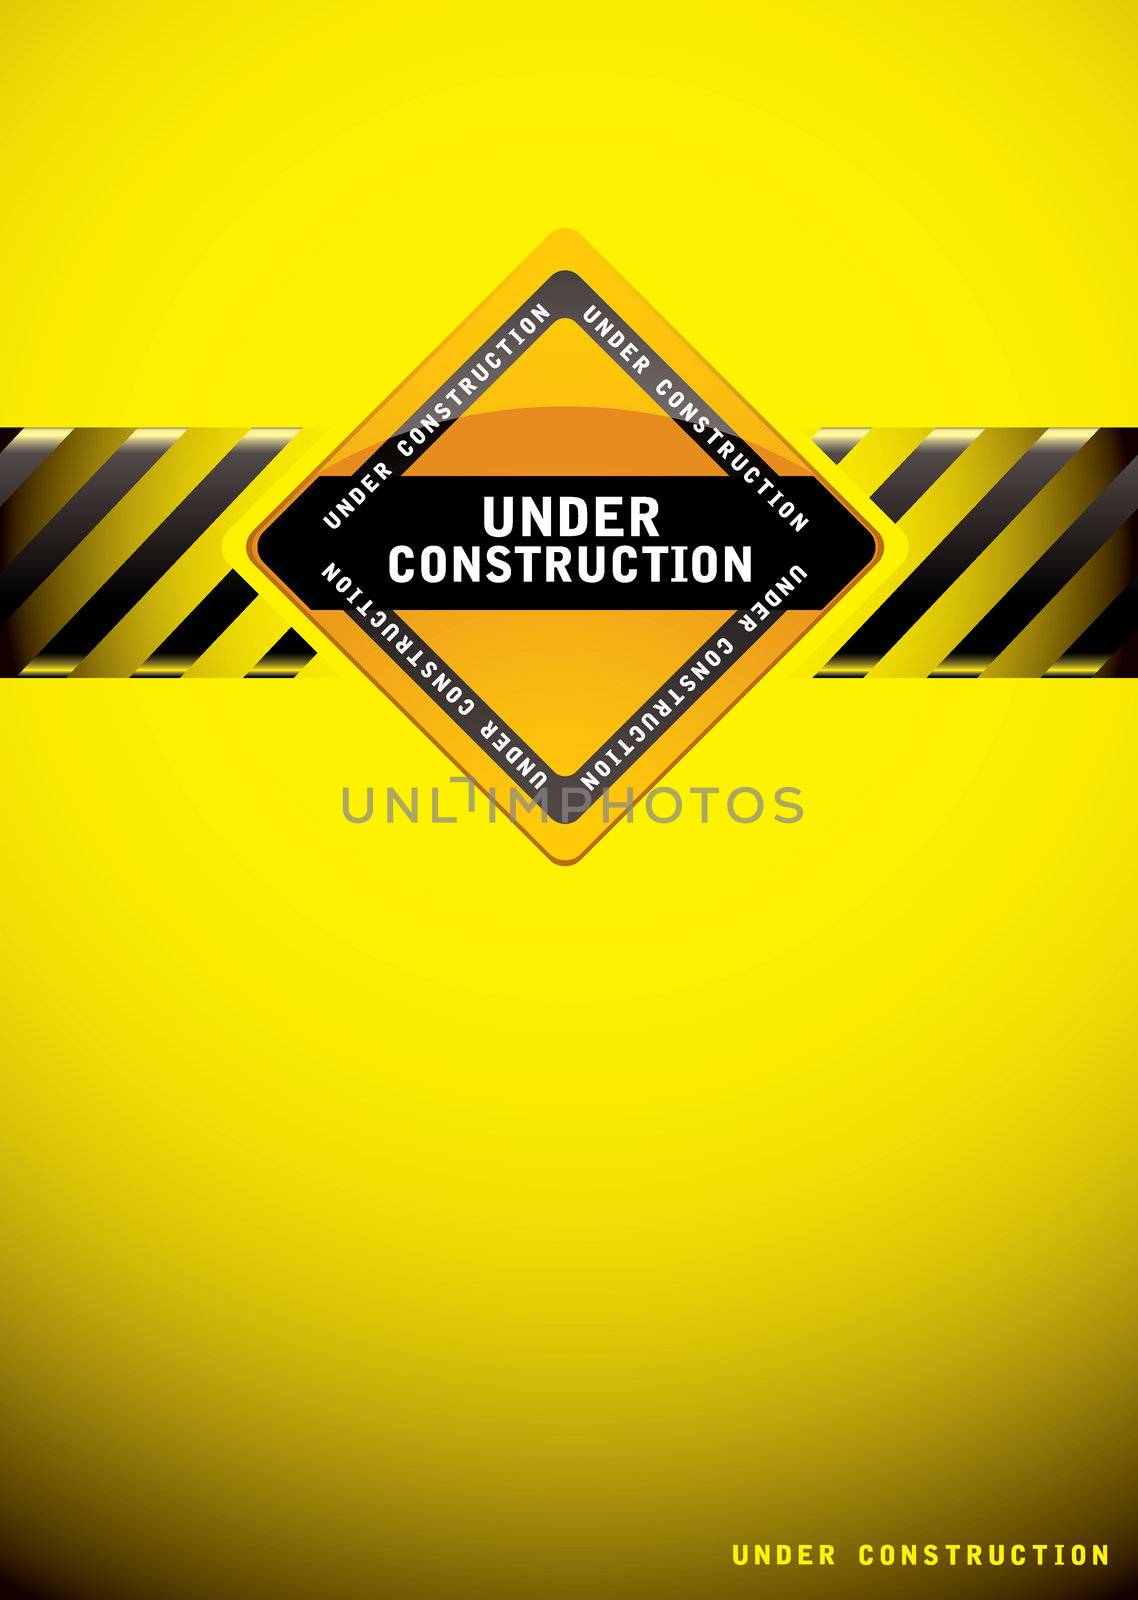 Under construction background by nicemonkey